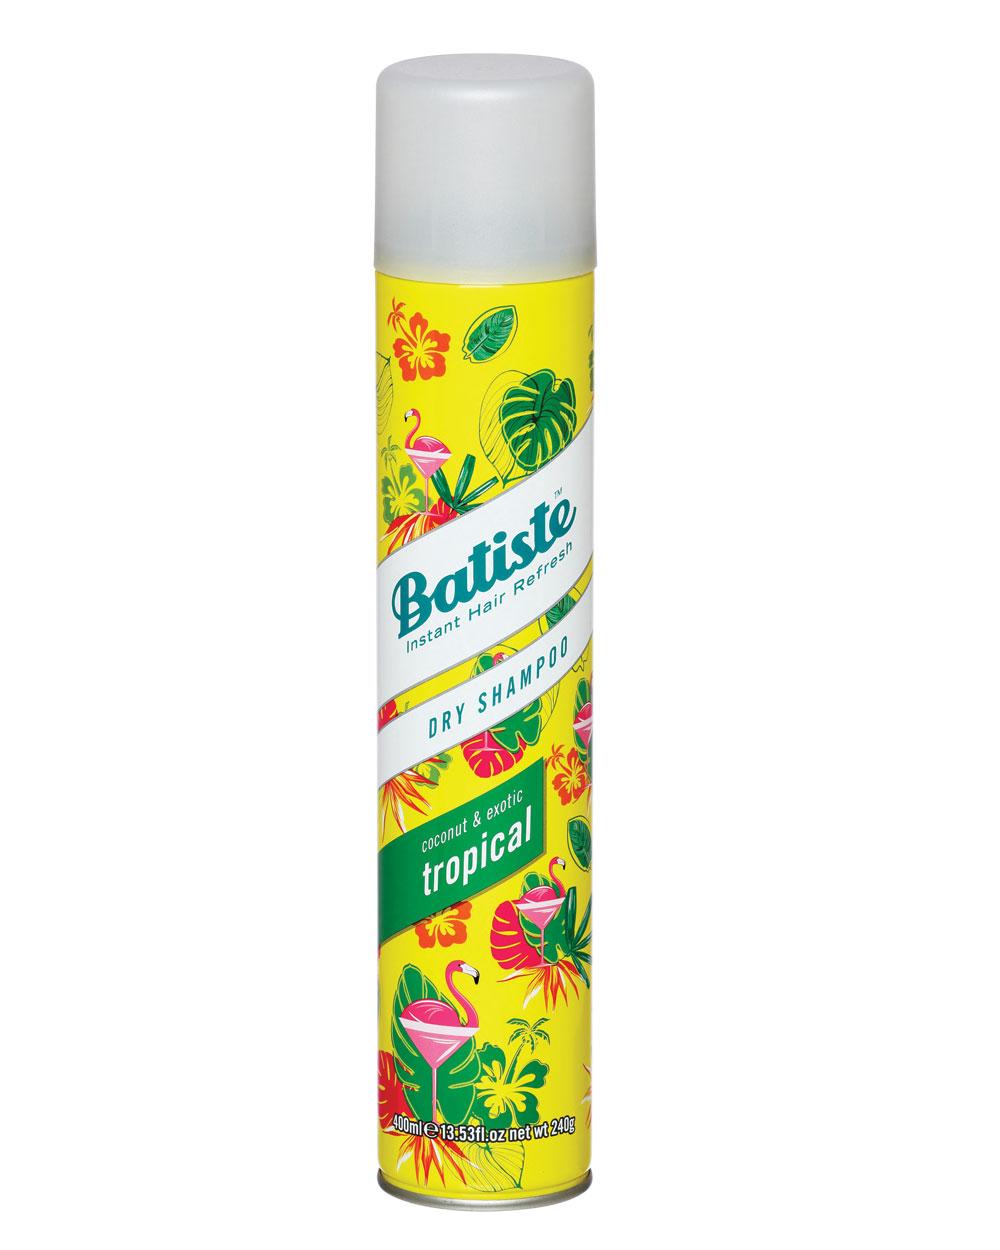 Fresh start Batiste Tropical Dry Shampoo, $12.99